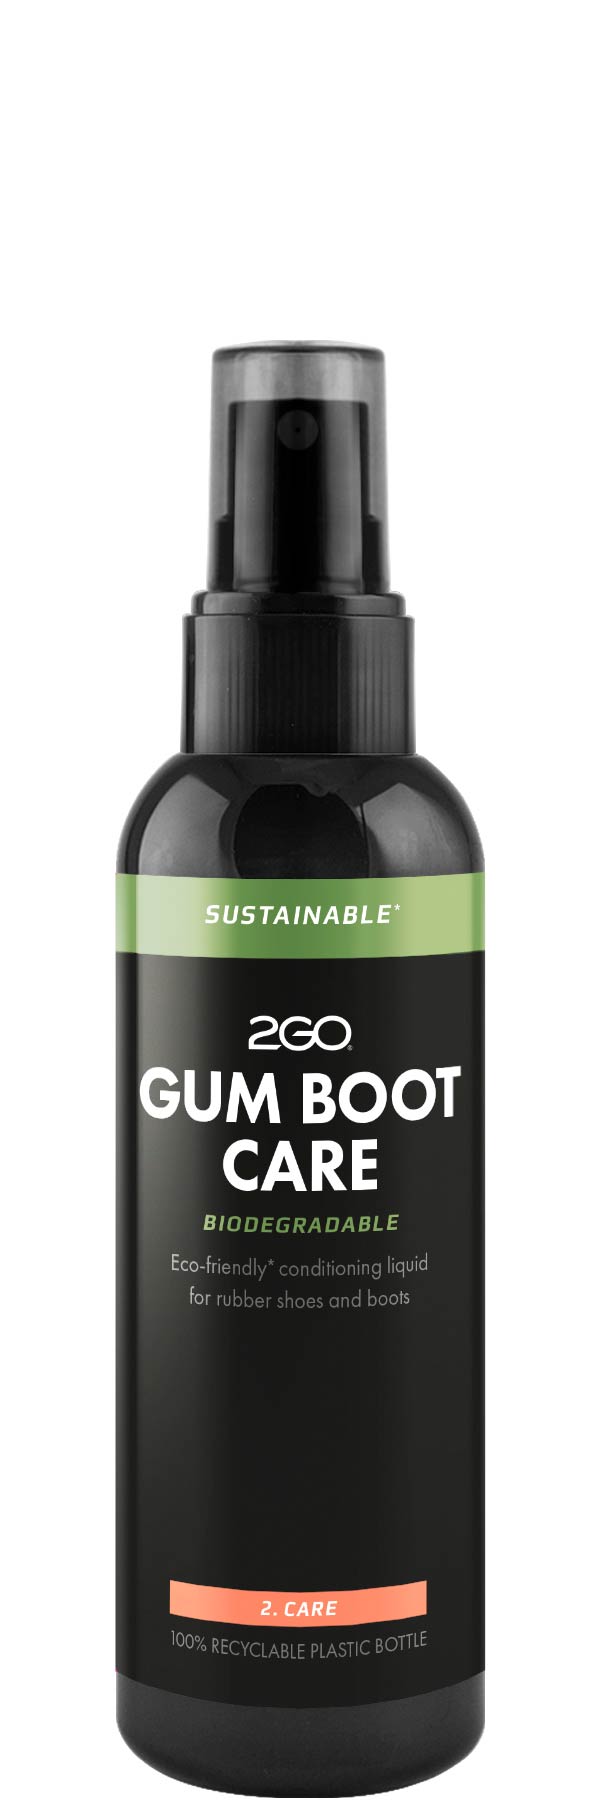 2GO - Sustainable Gum Boot Care